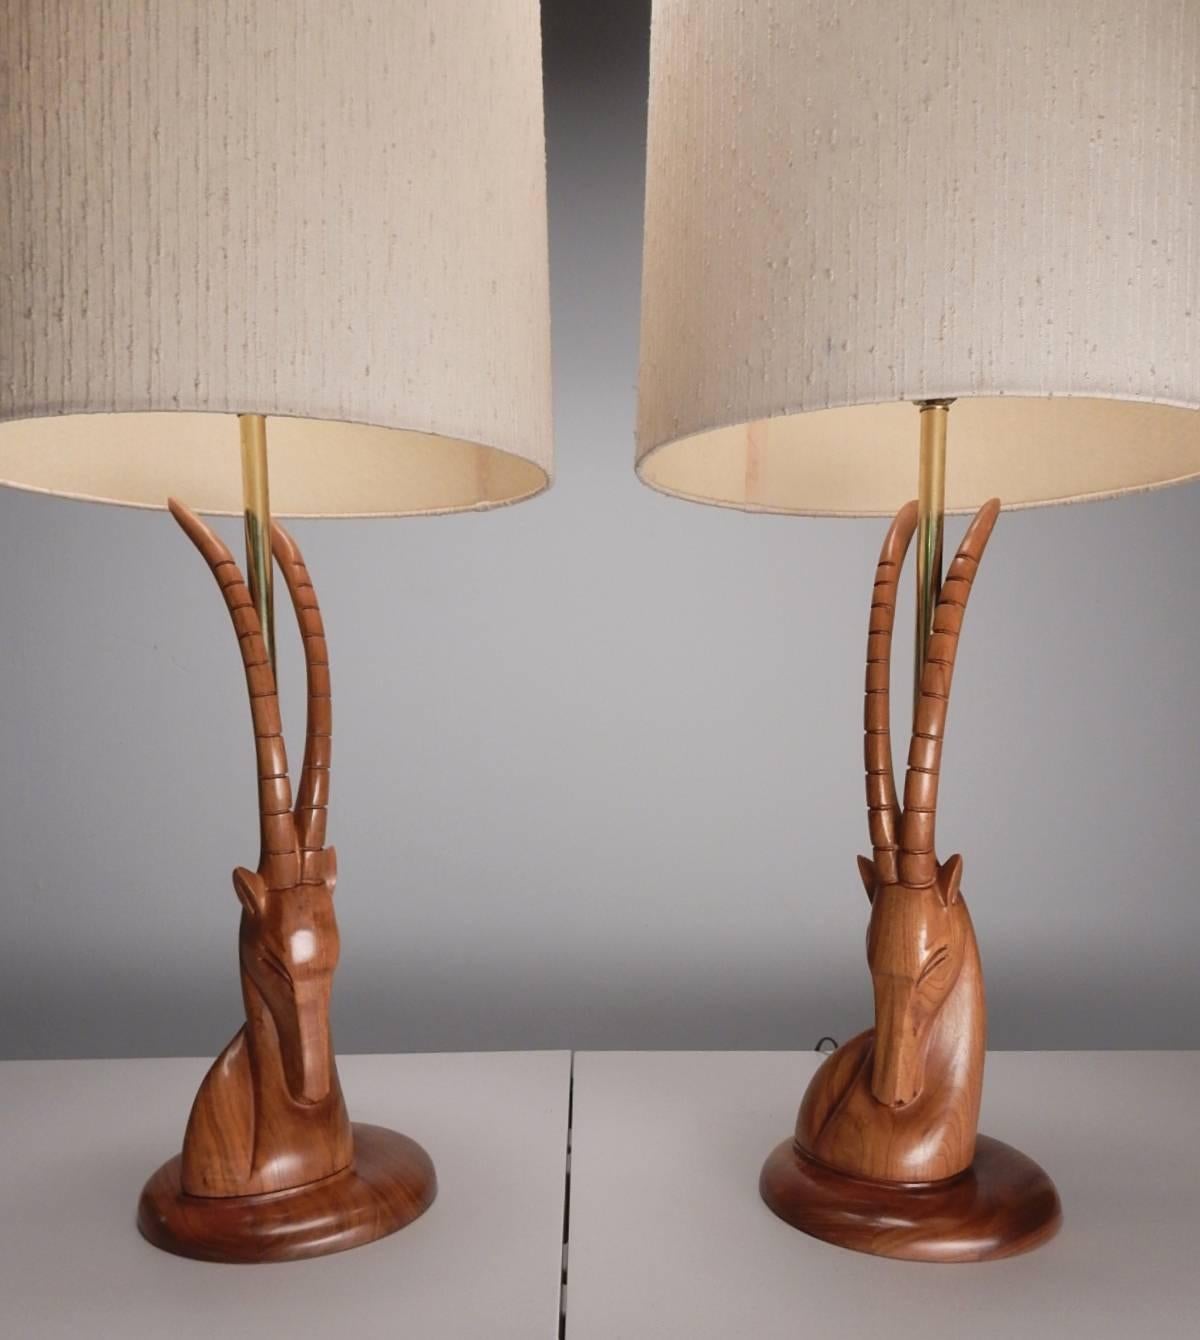 lamp with ibex design